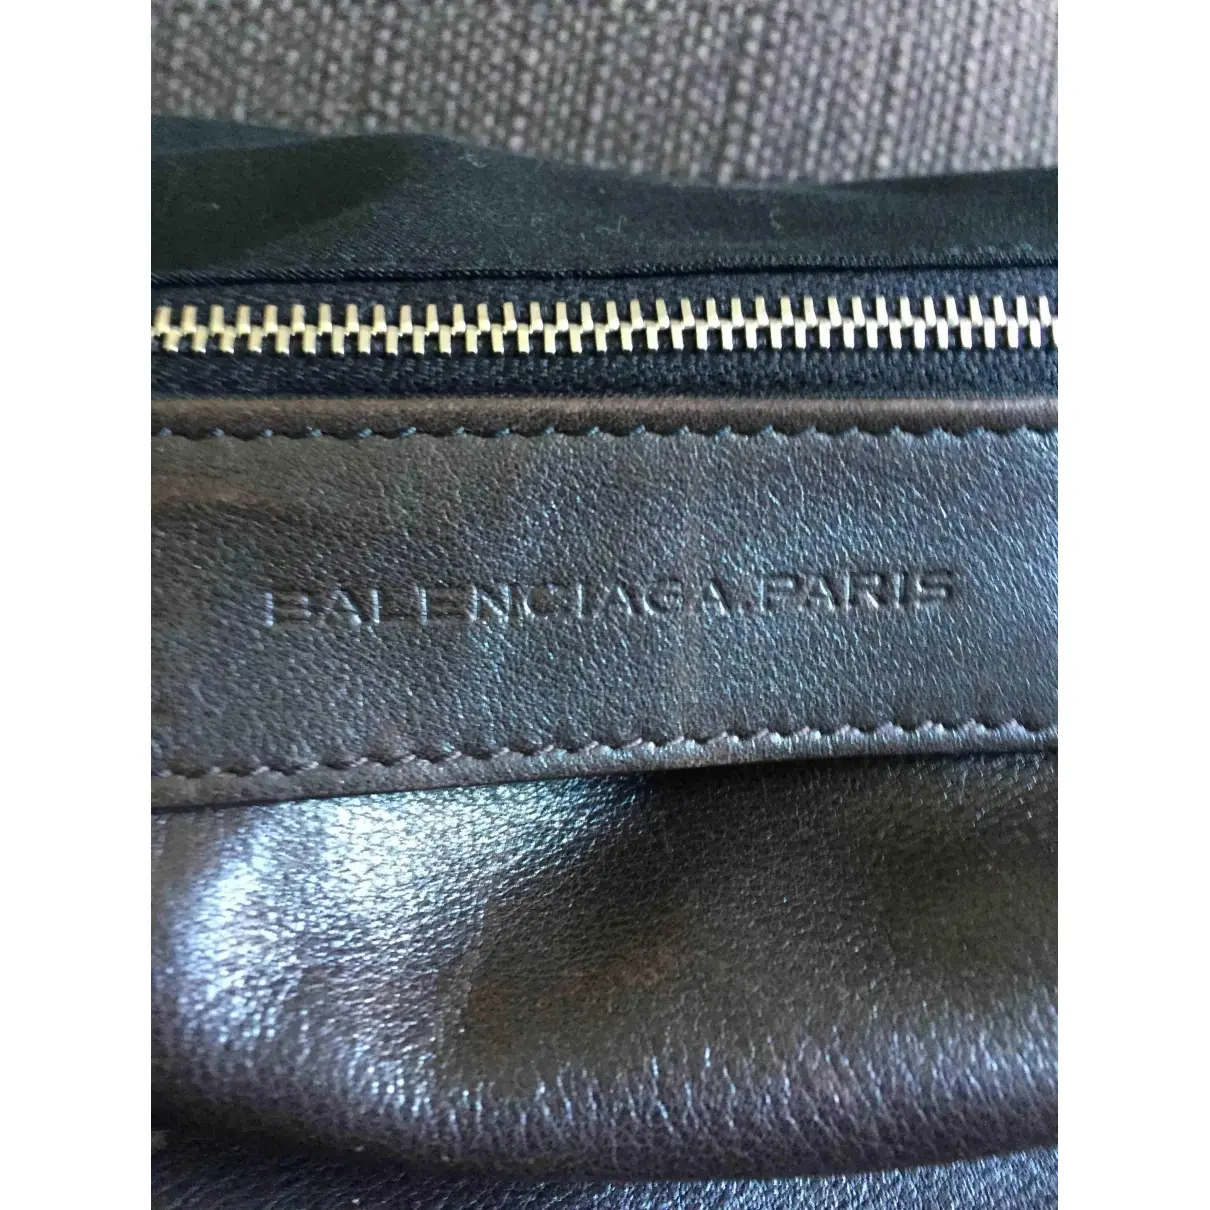 Buy Balenciaga Leather crossbody bag online